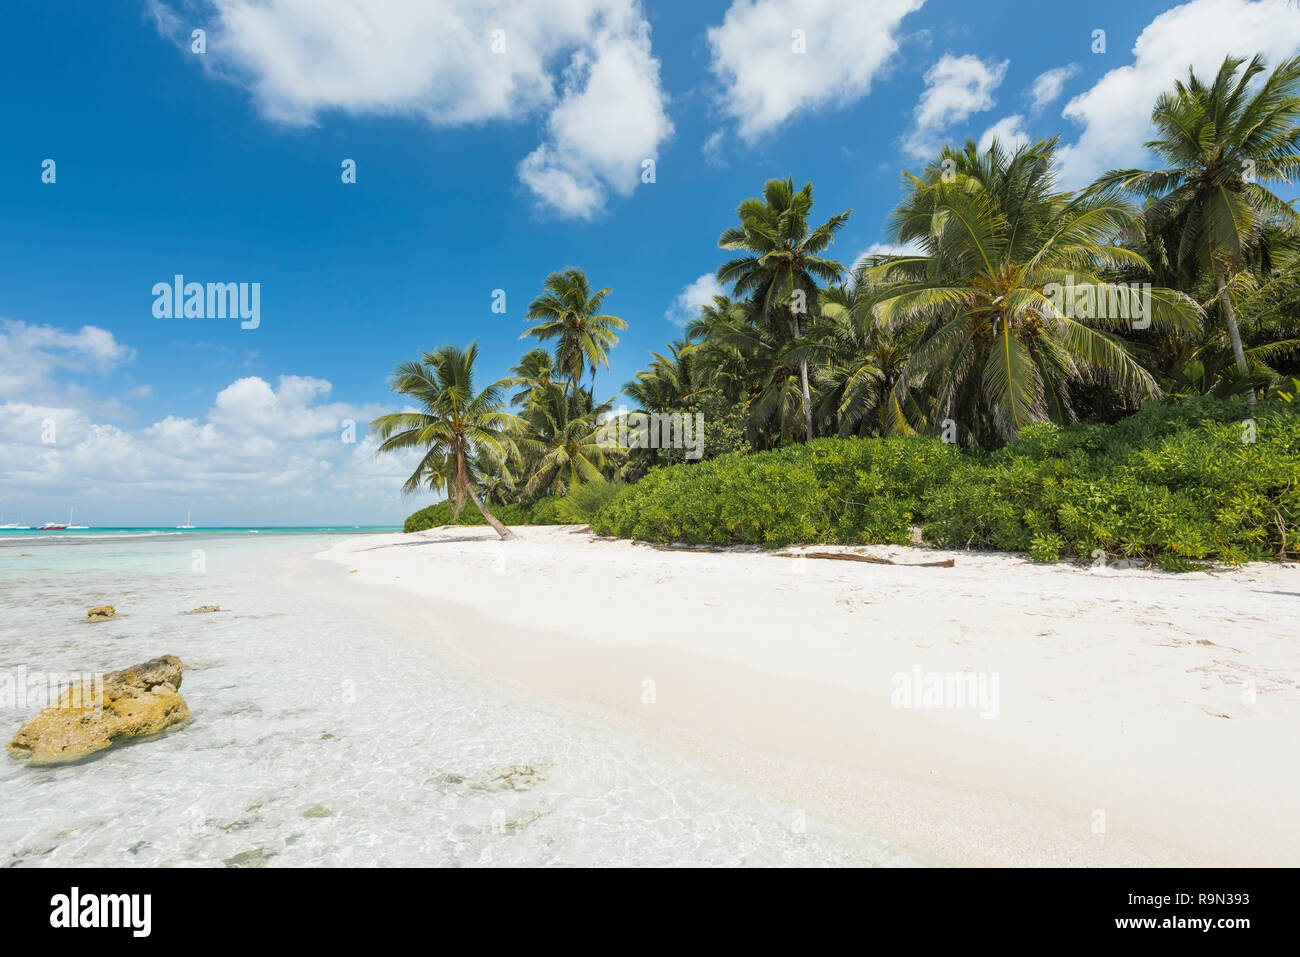 Traumstrand der Karibik, Dream beach of the Caribbean Stock Photo